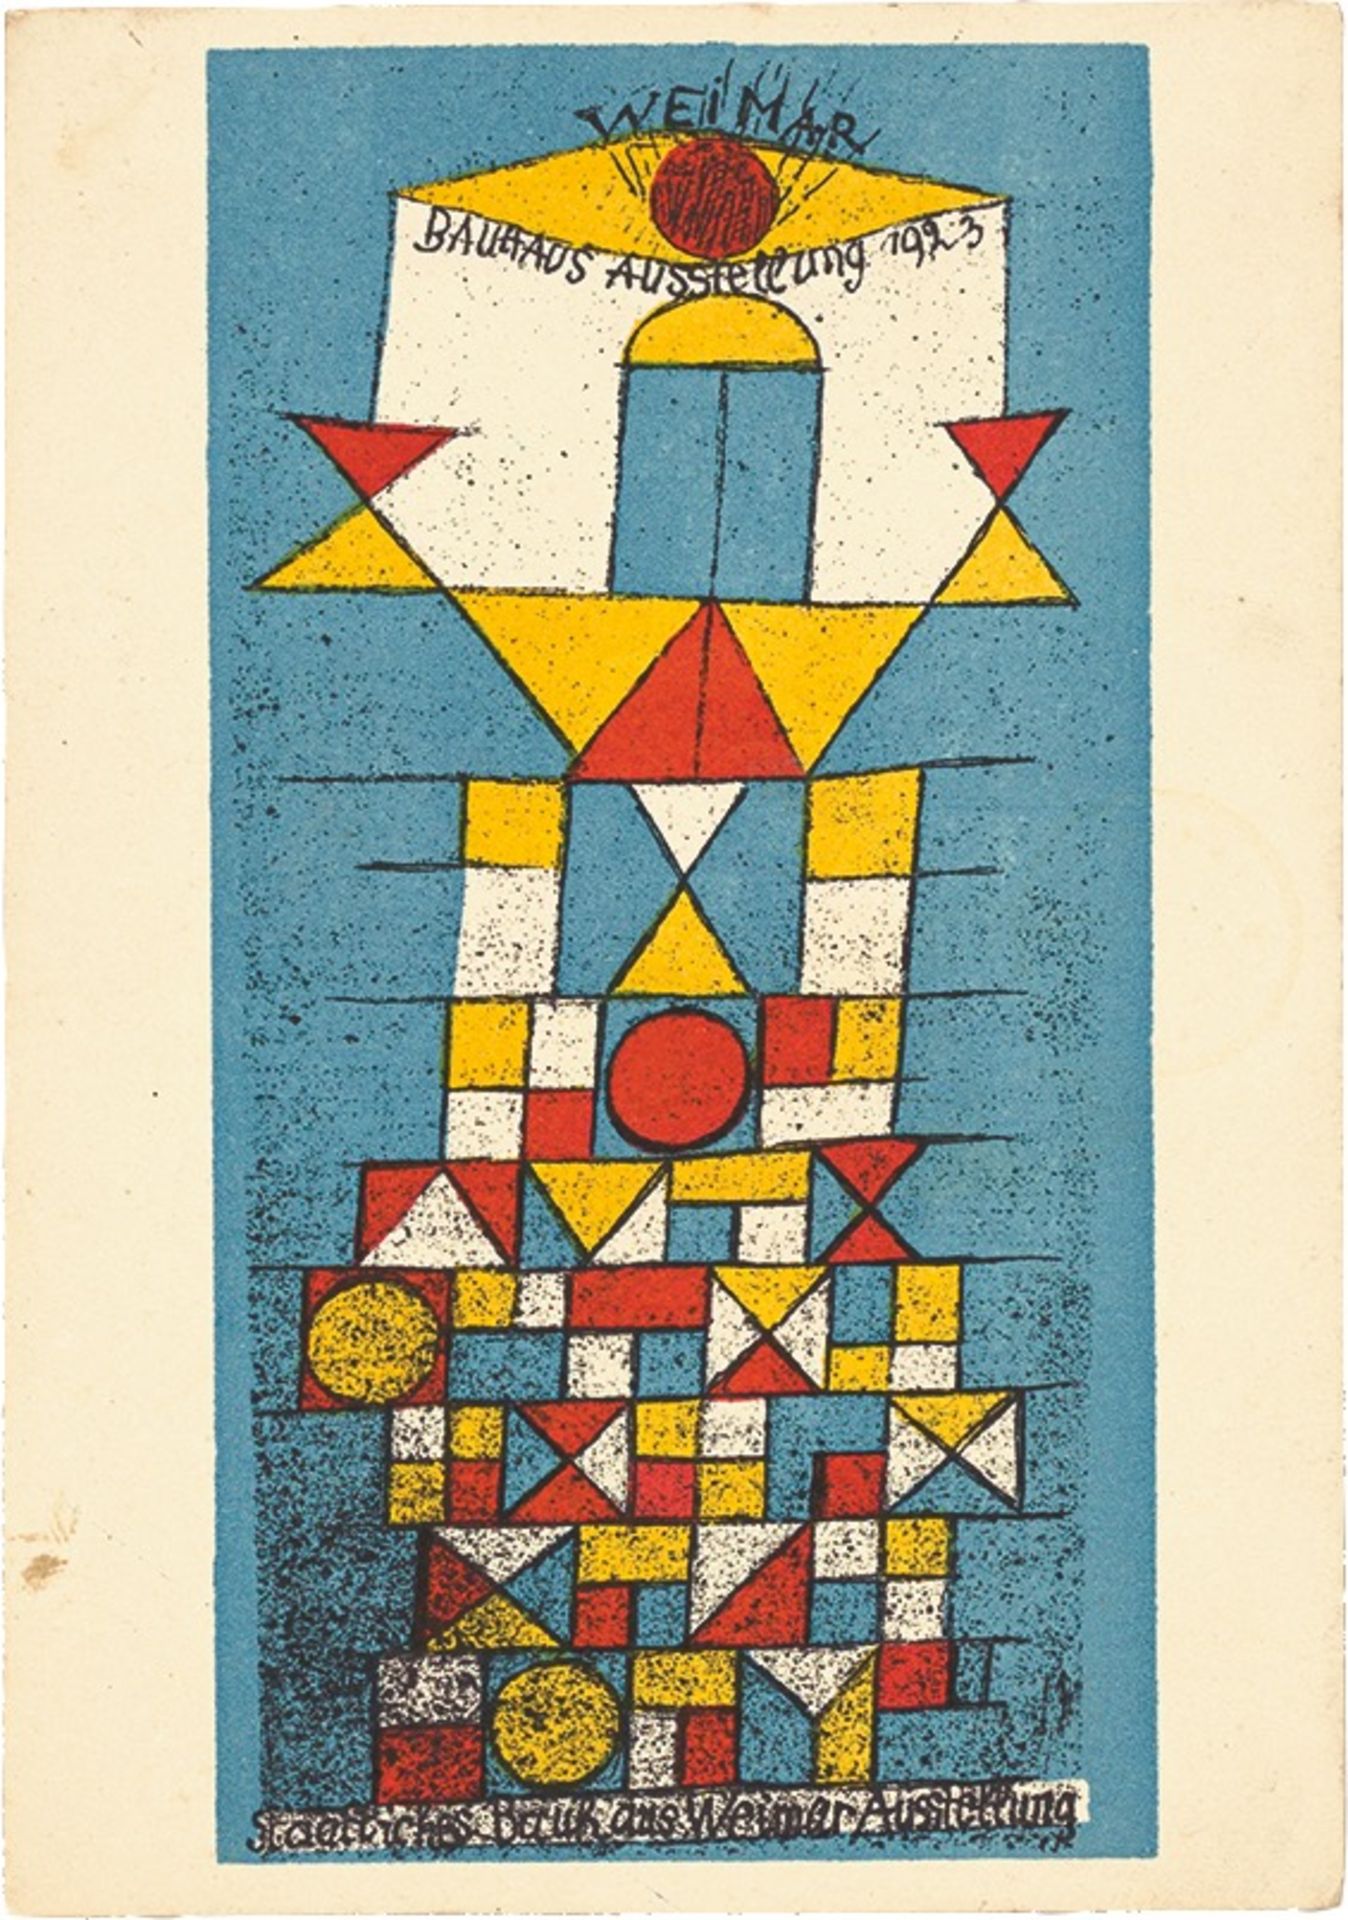 Bauhaus. „Ausstellung Weimar 1923“ – 20 Postkarten verschiedener Bauhaus-Künstler. 1923 - Bild 4 aus 20